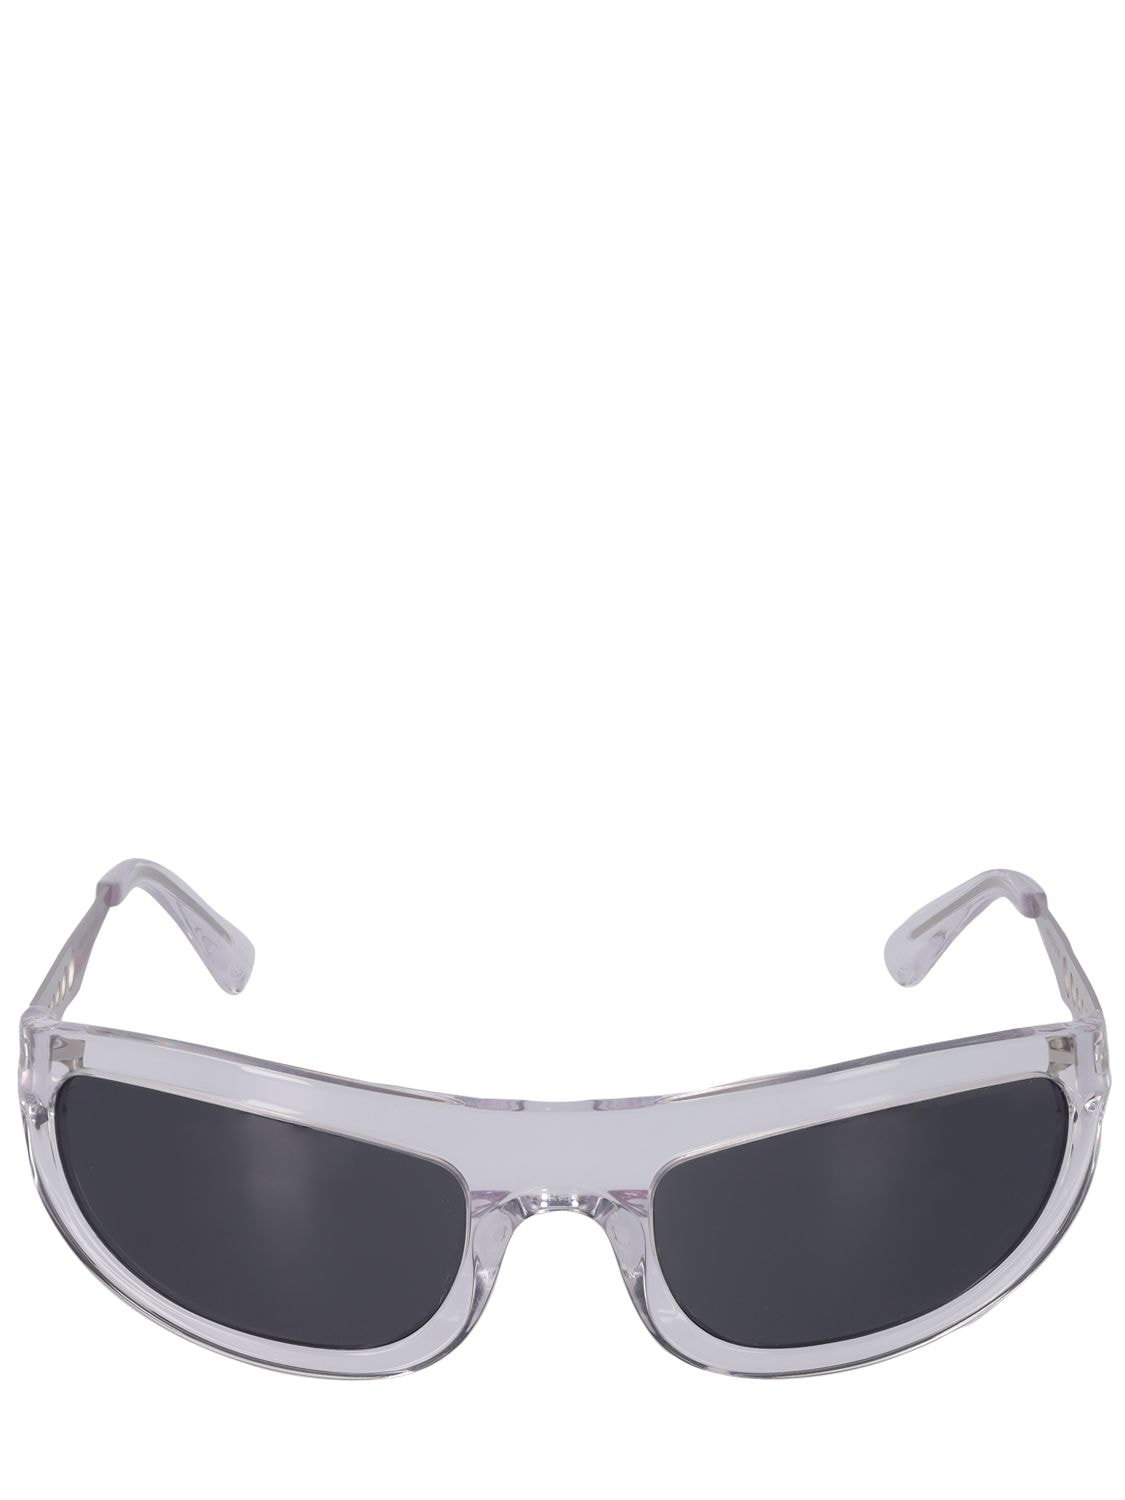 Image of Corten Glacial Steel Sunglasses